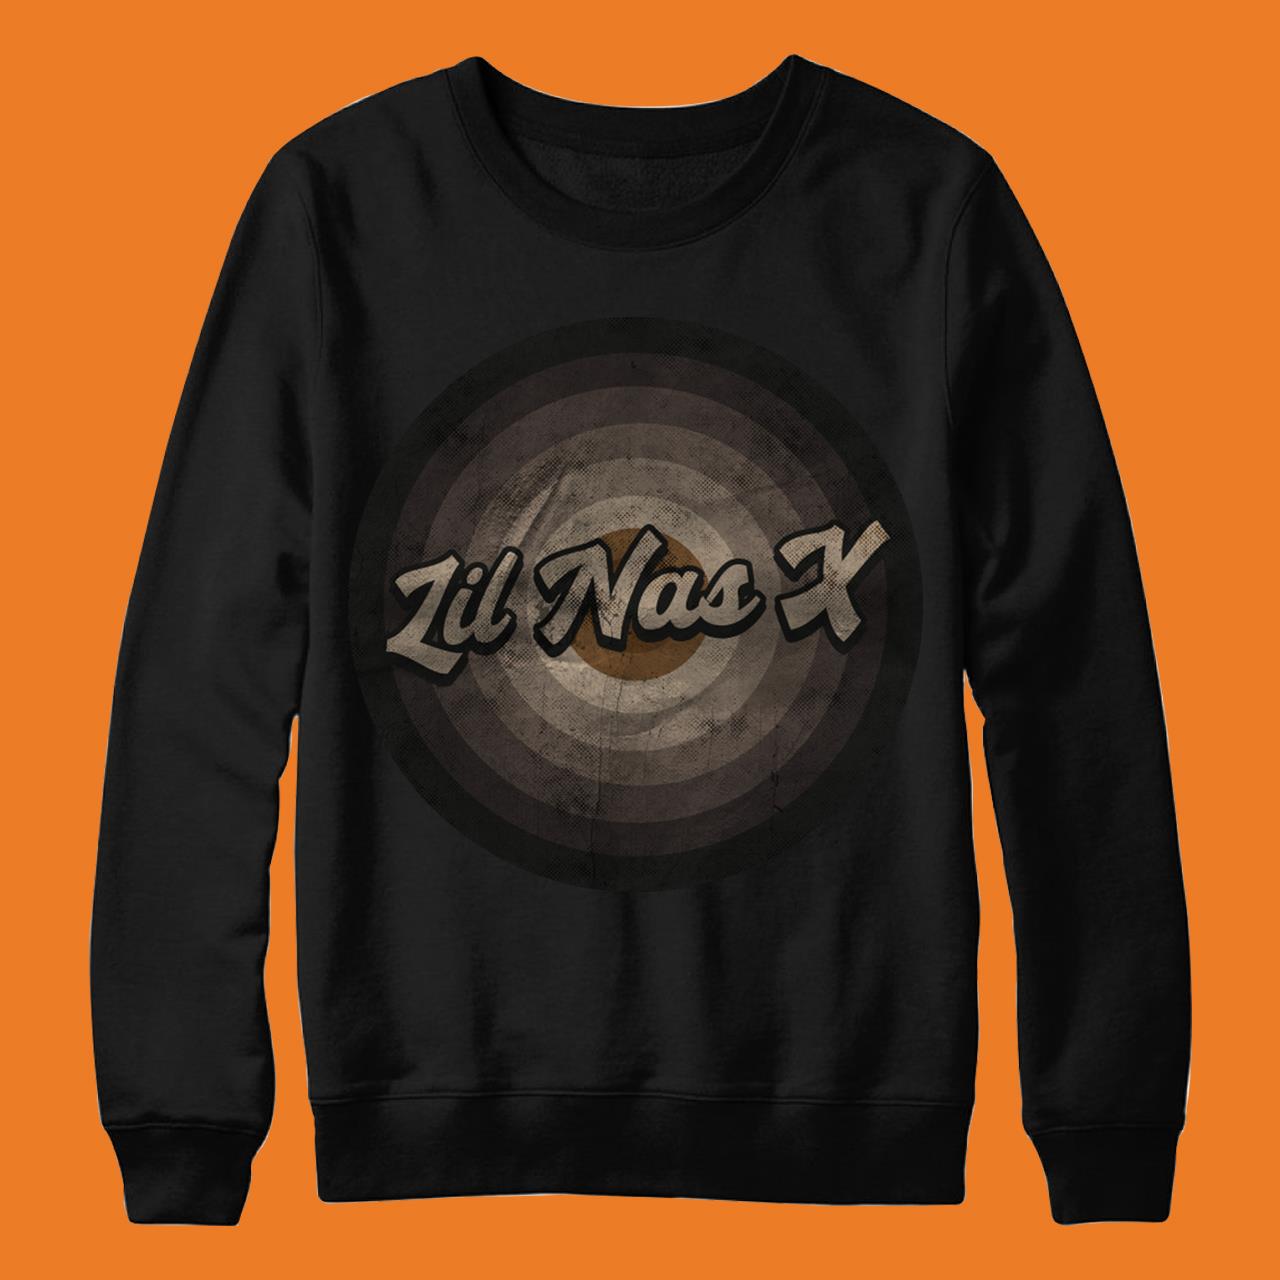 Retro 80s Lil Nas X T-Shirt